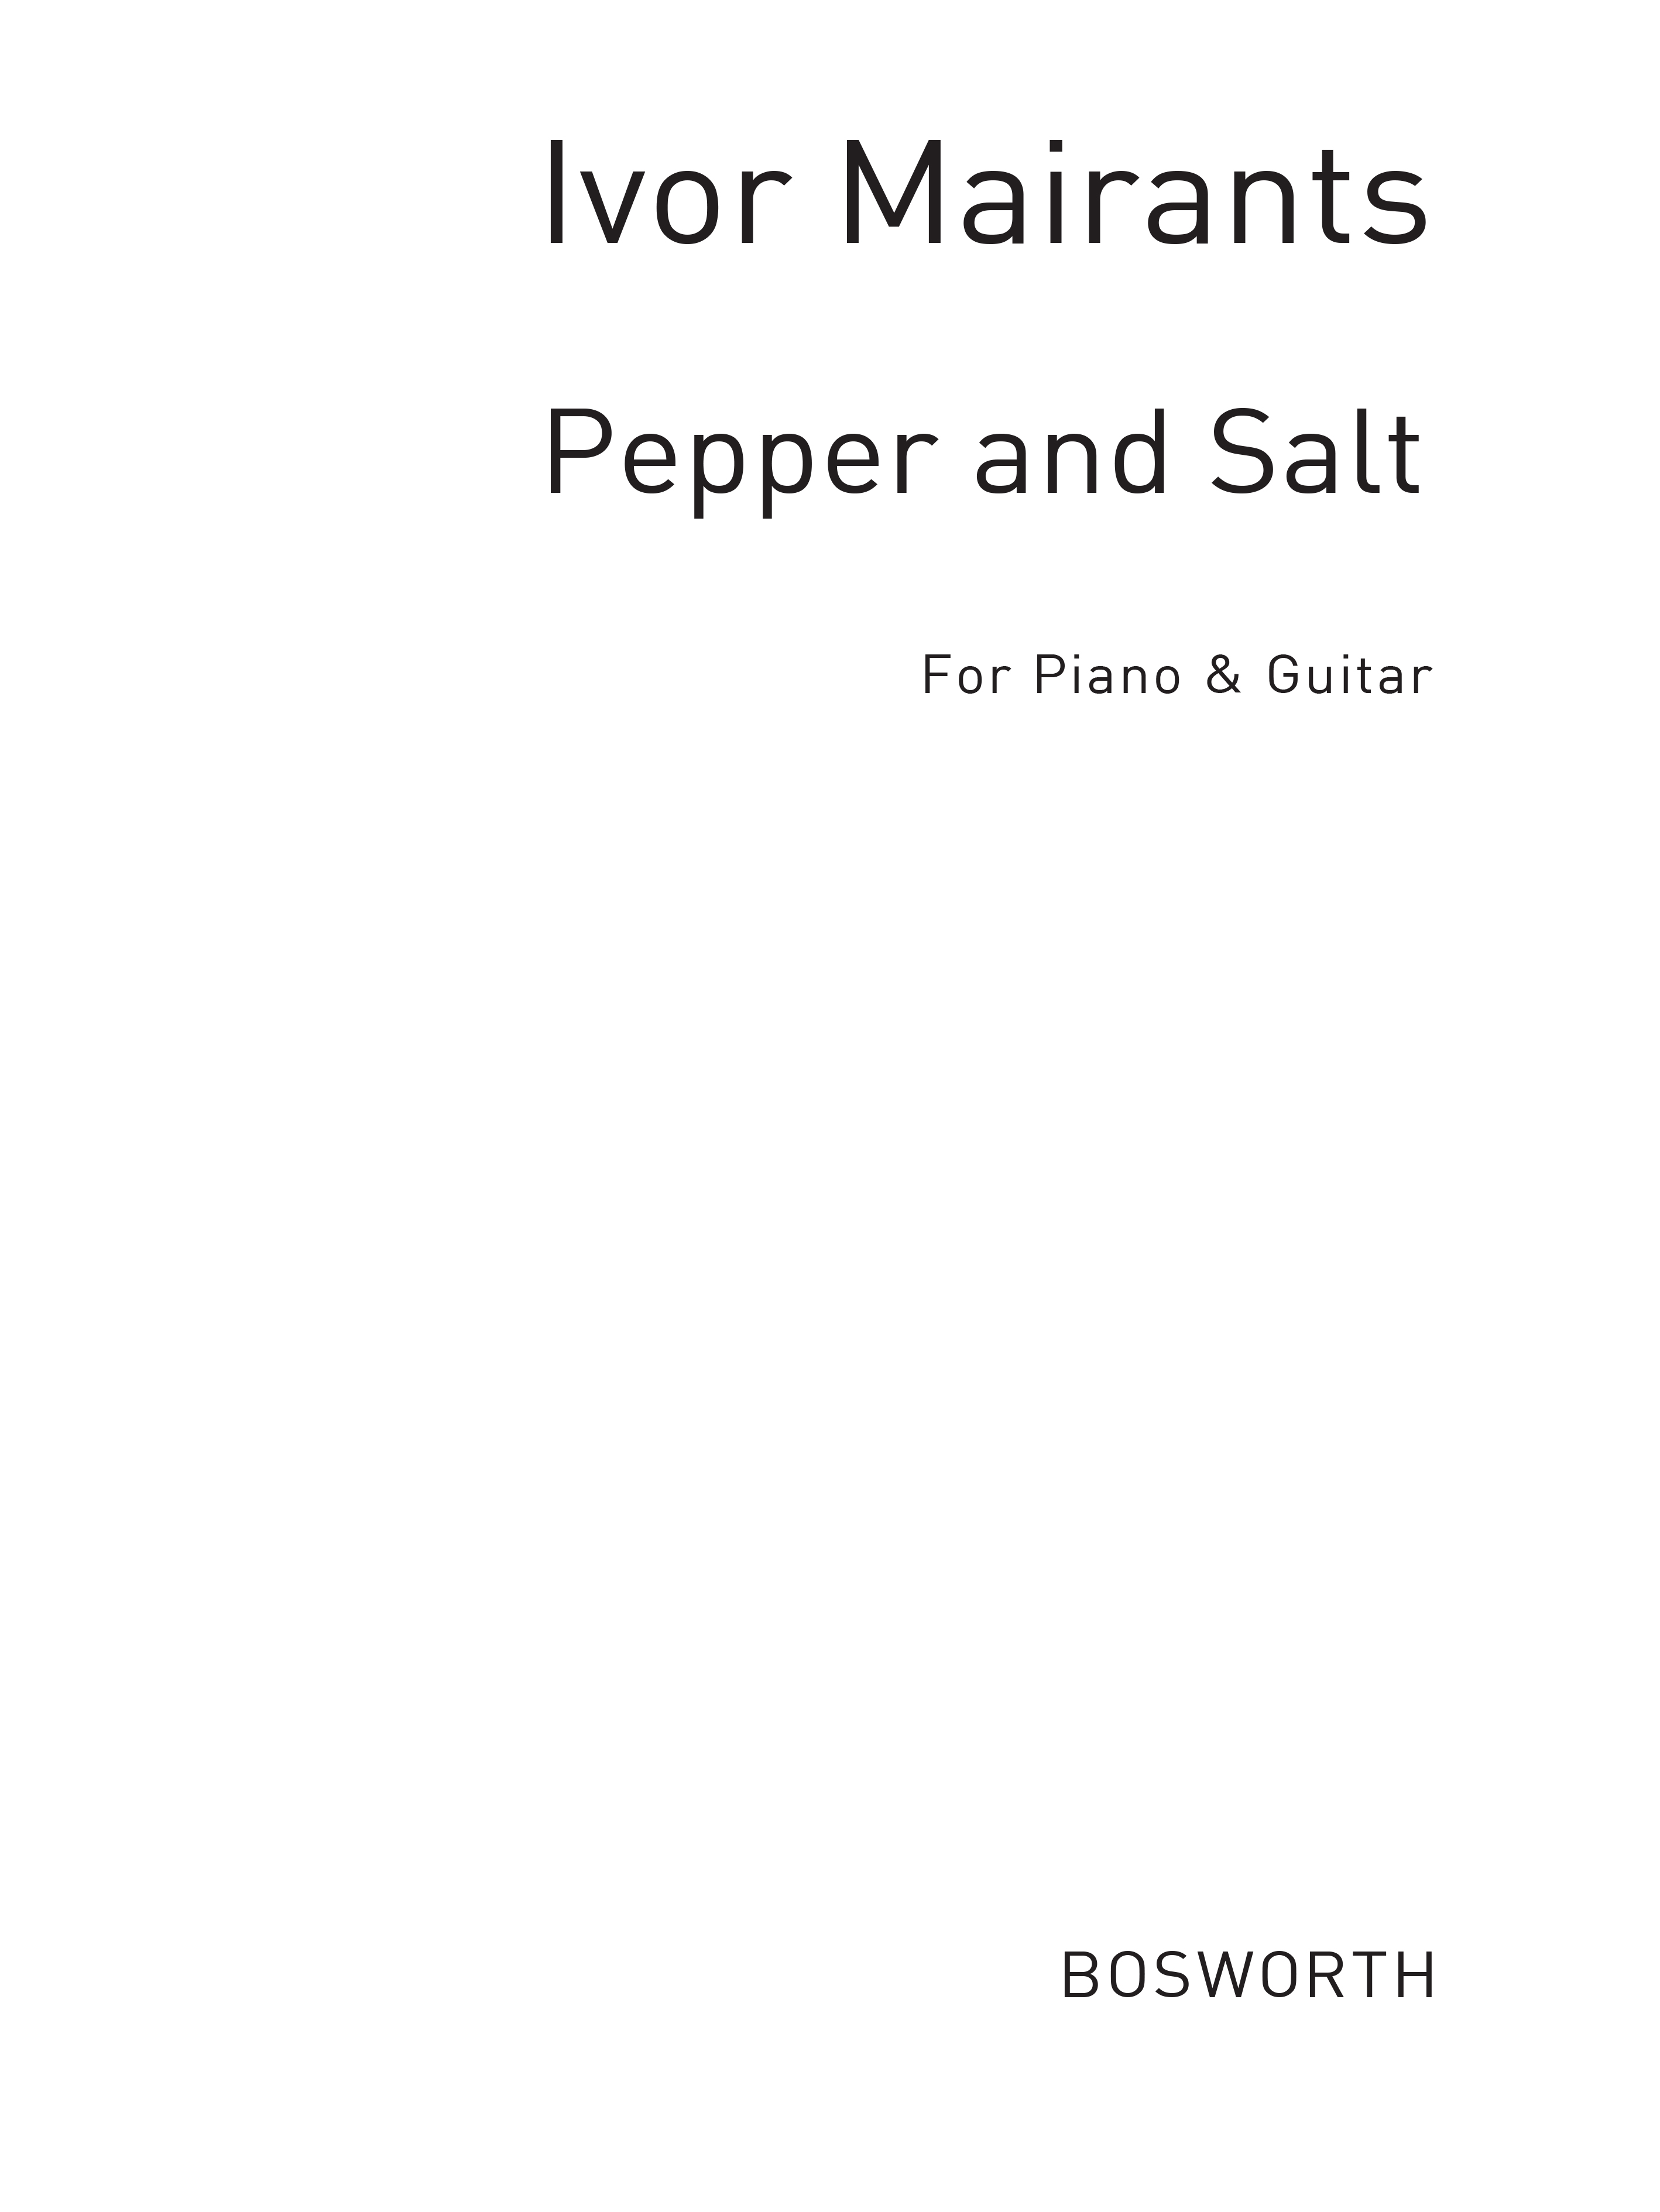 Mairants, I 3 Pepper And Salt Elec And Span Gtr Solos Gtr/Pf